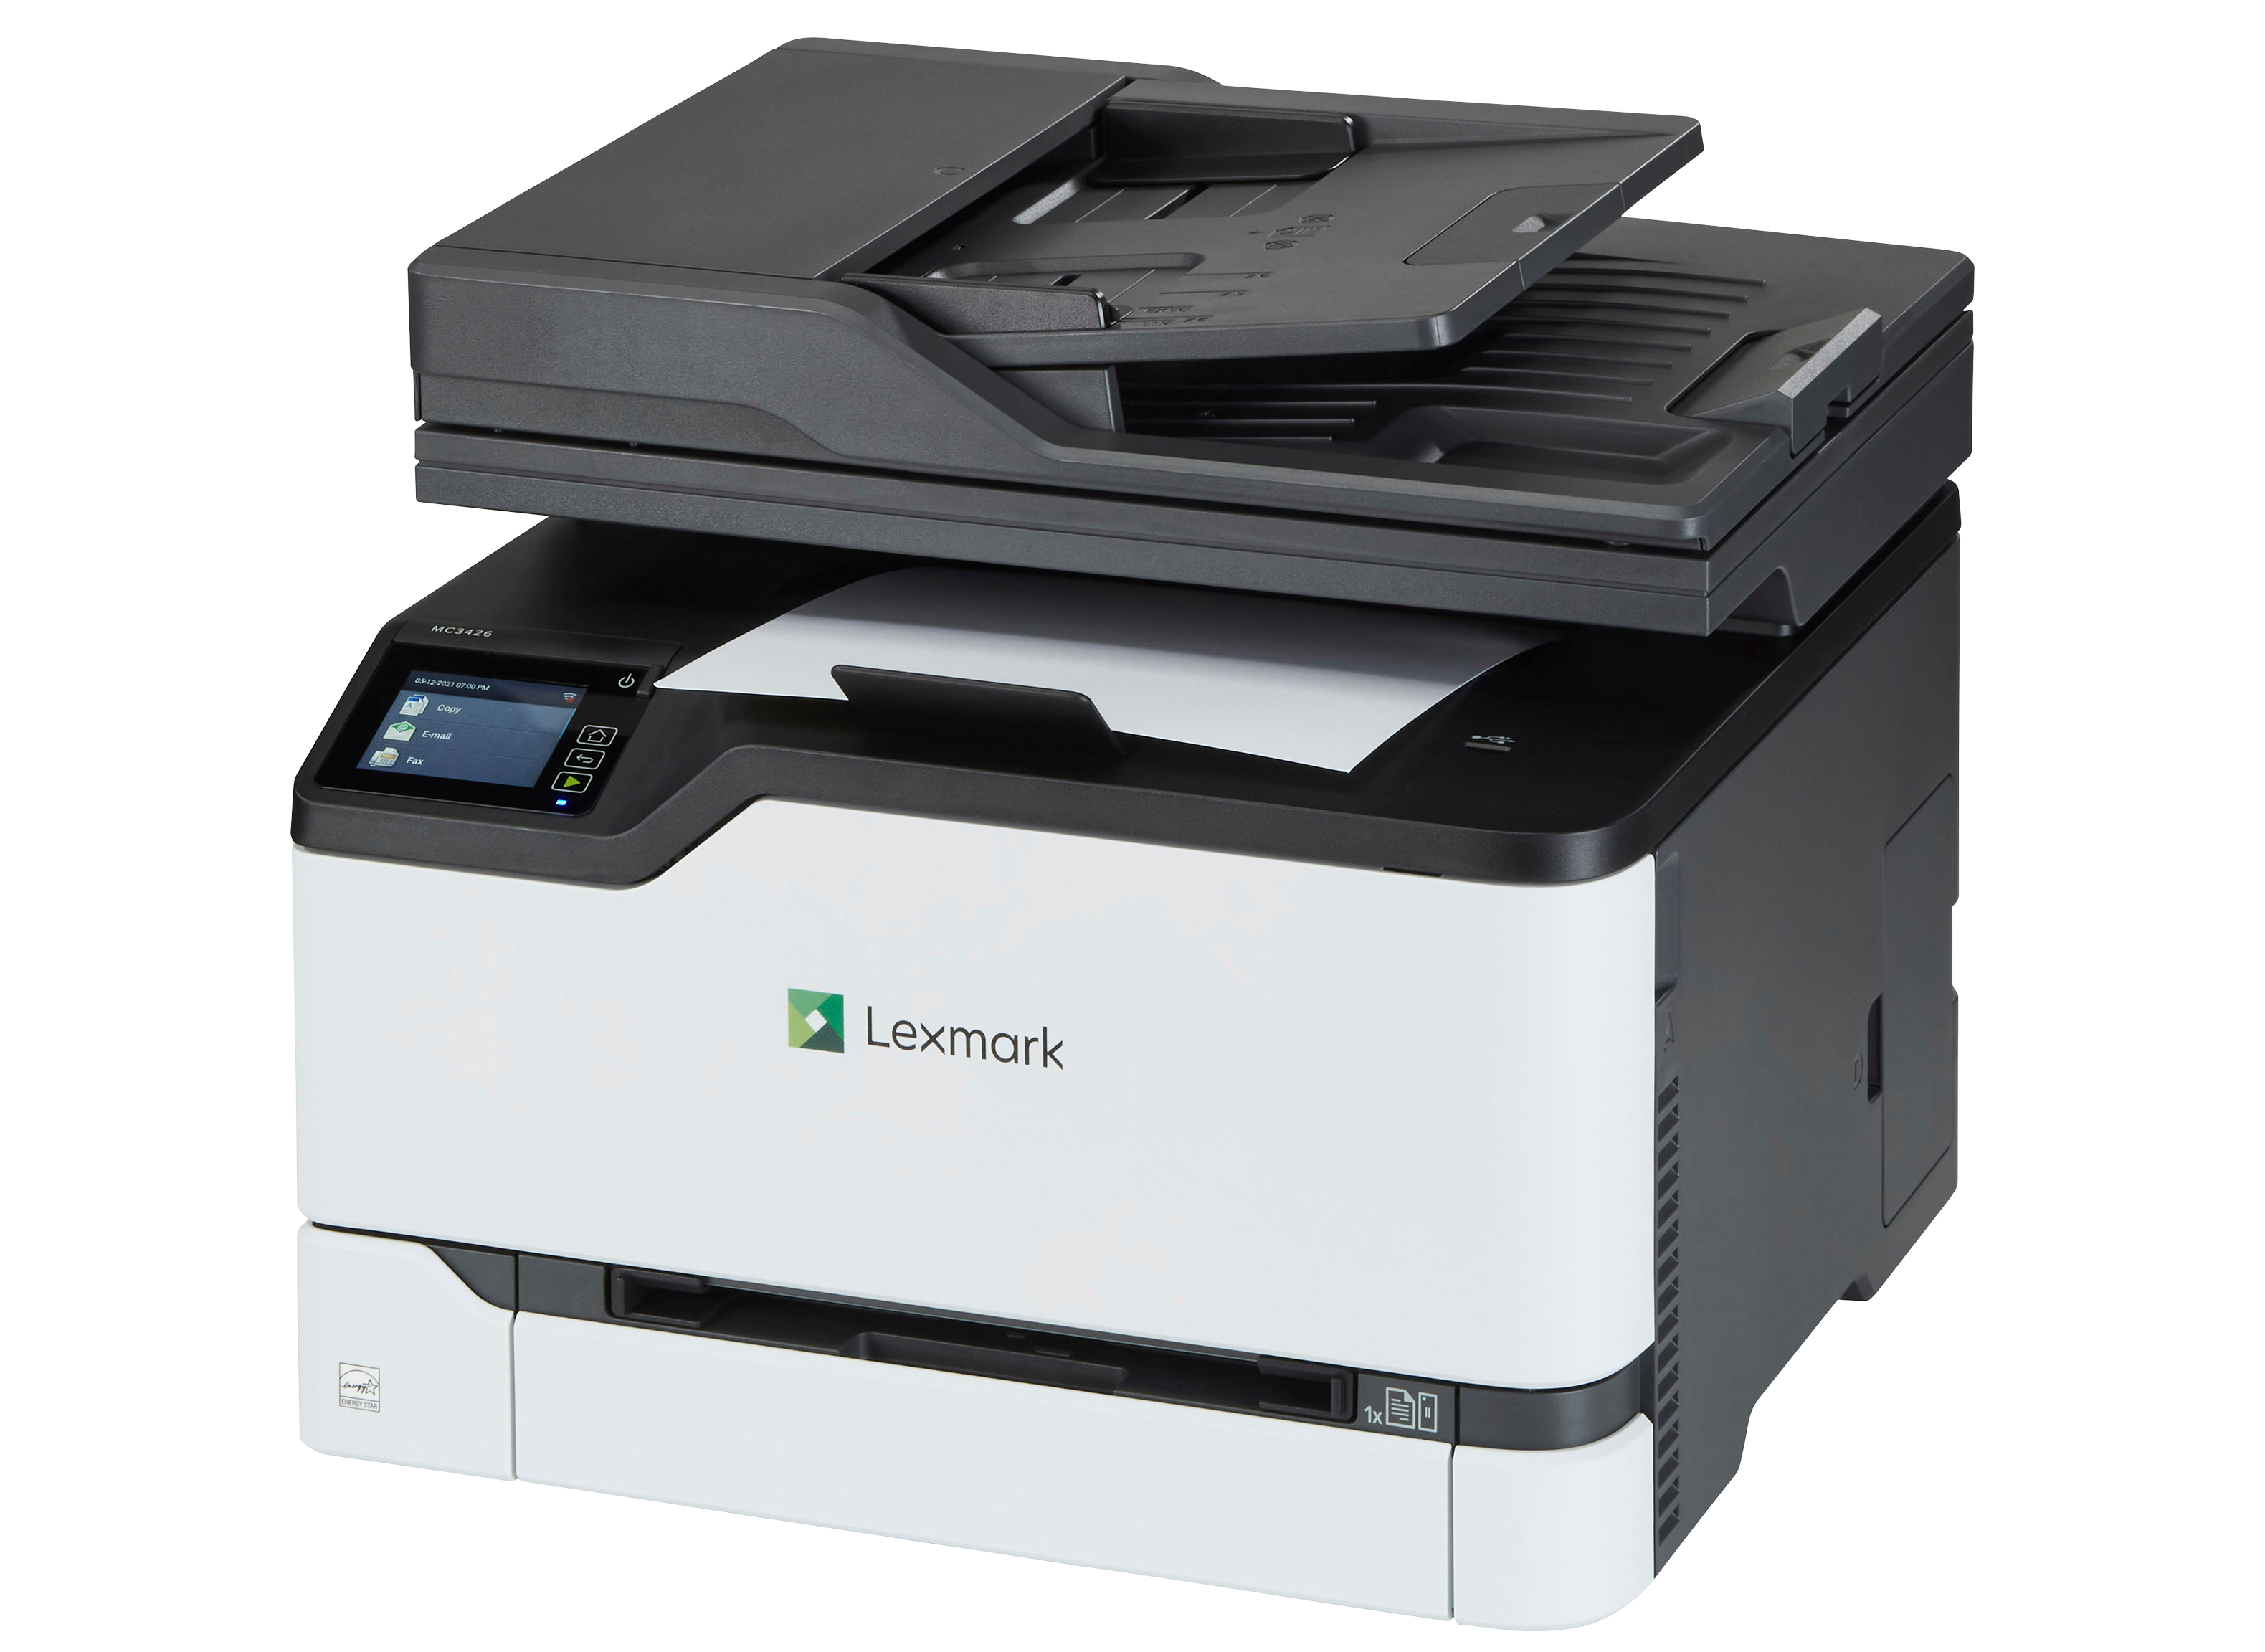 Lexmark MC3426i Printer Review Consumer Reports